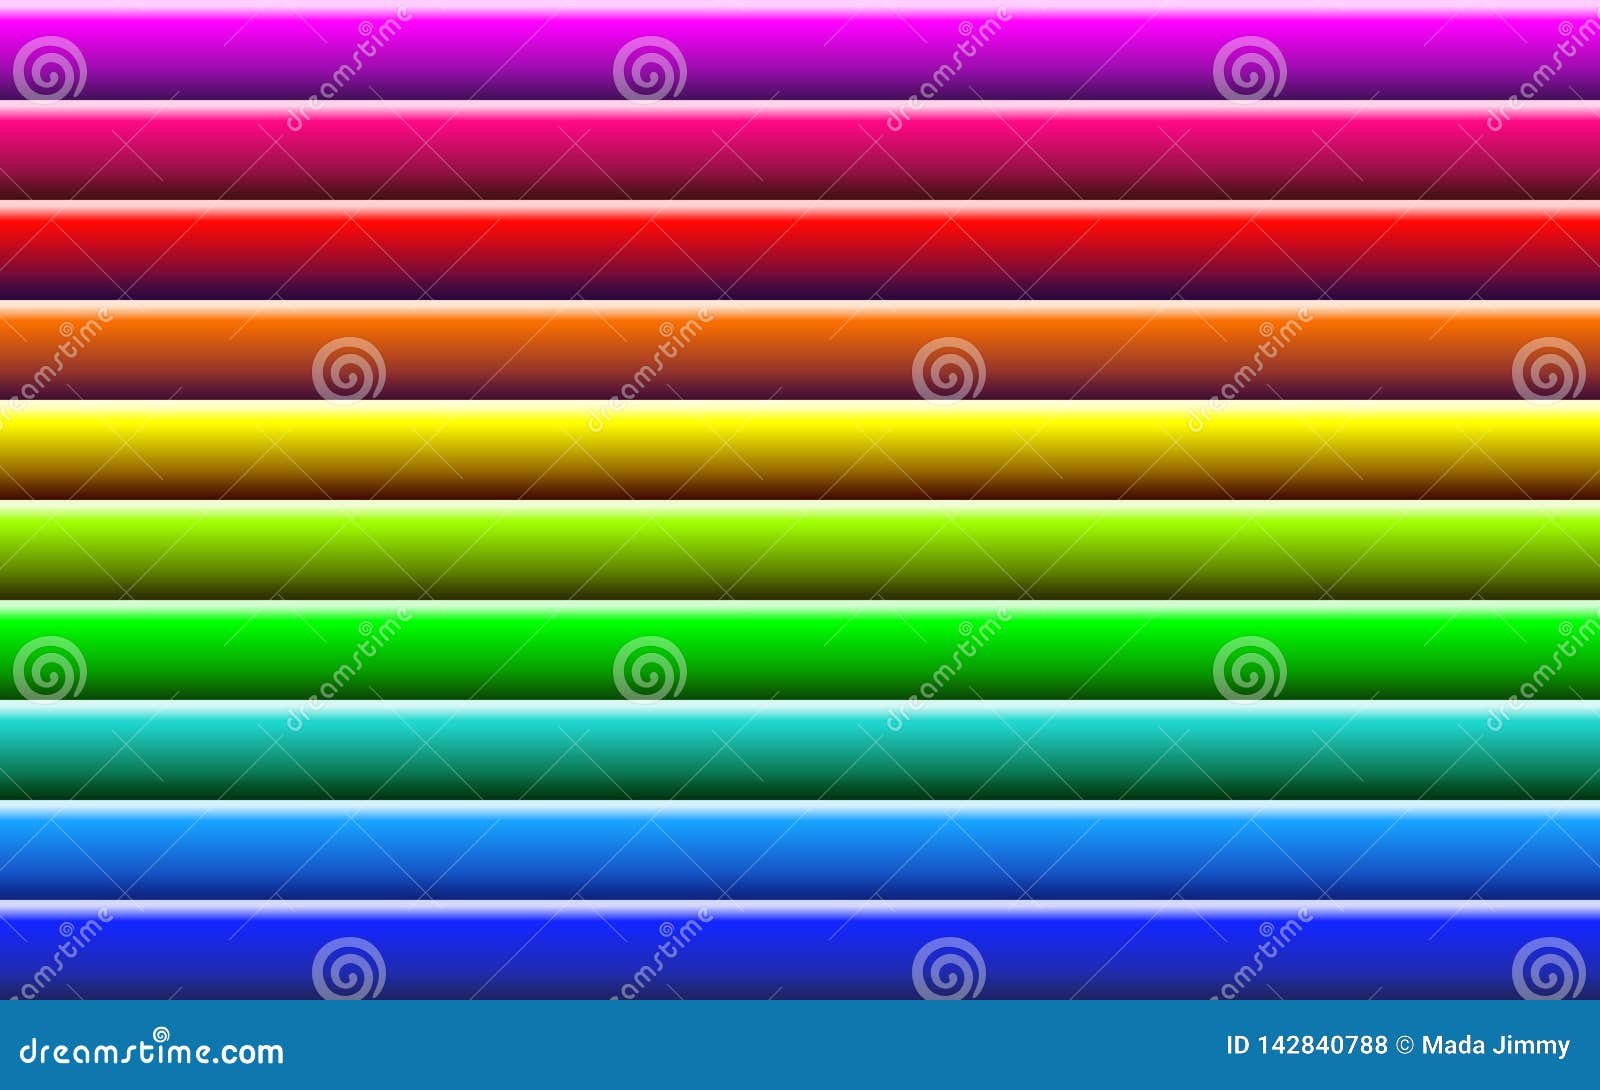 Colorful Bar Rainbow Background Stock Vector ...